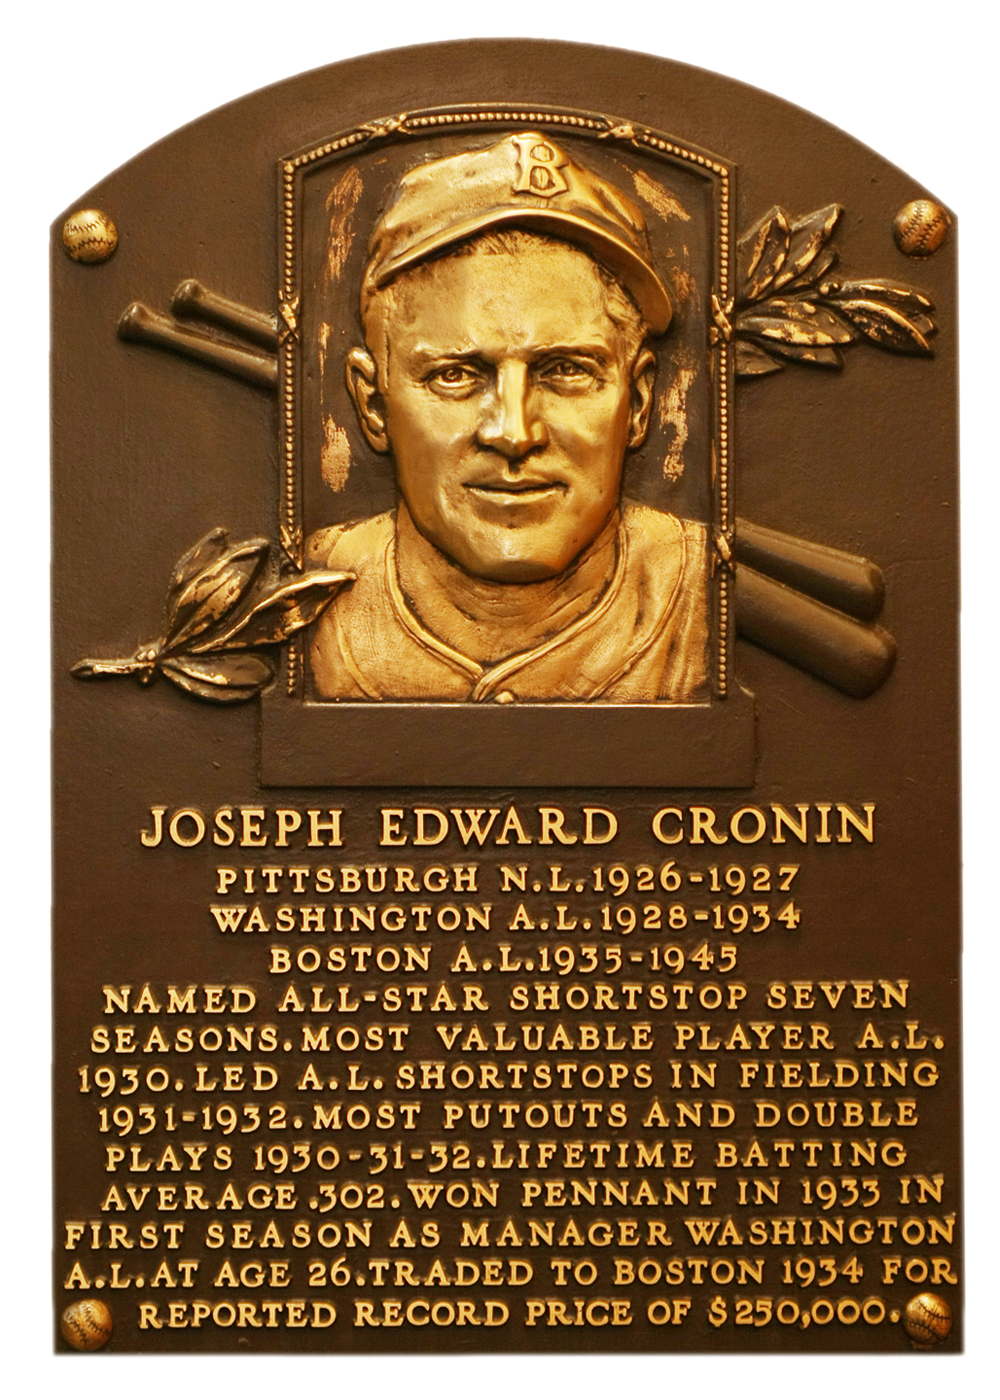 Joe Cronin Hall of Fame plaque